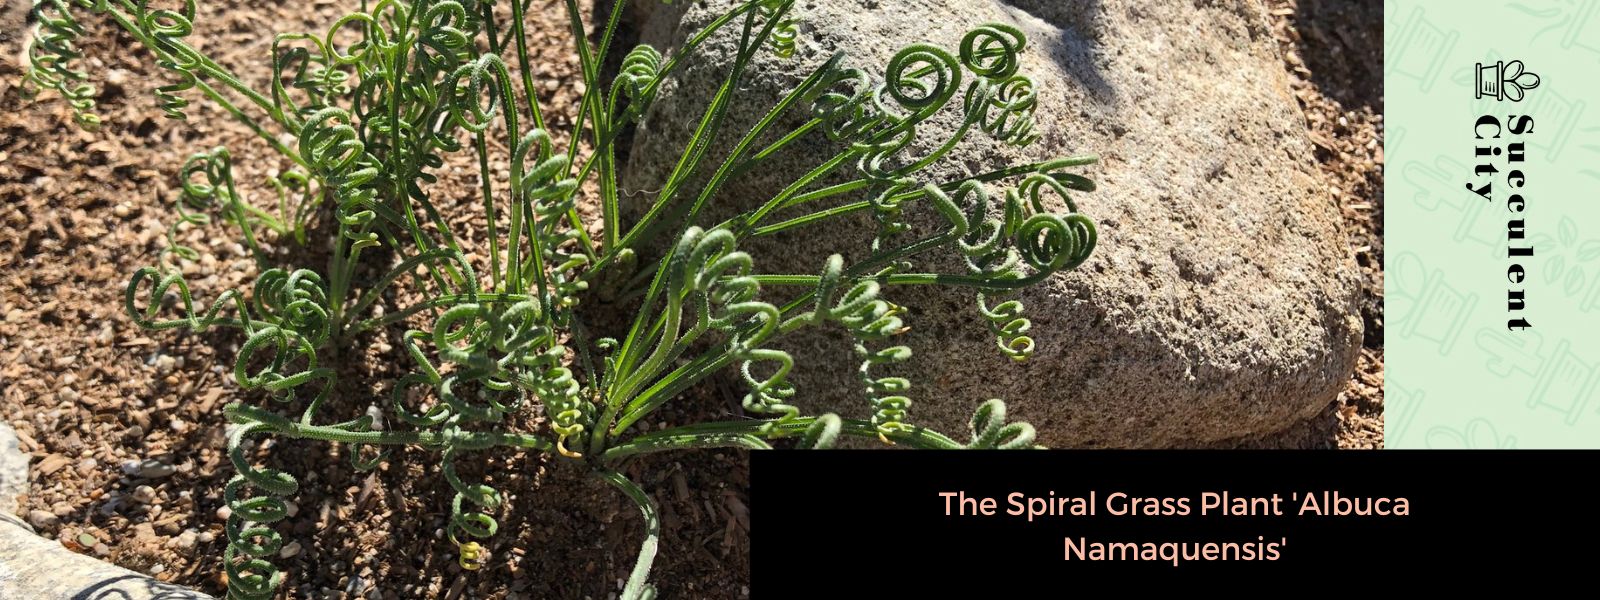 La hierba espiral “Albuca Namaquensis”